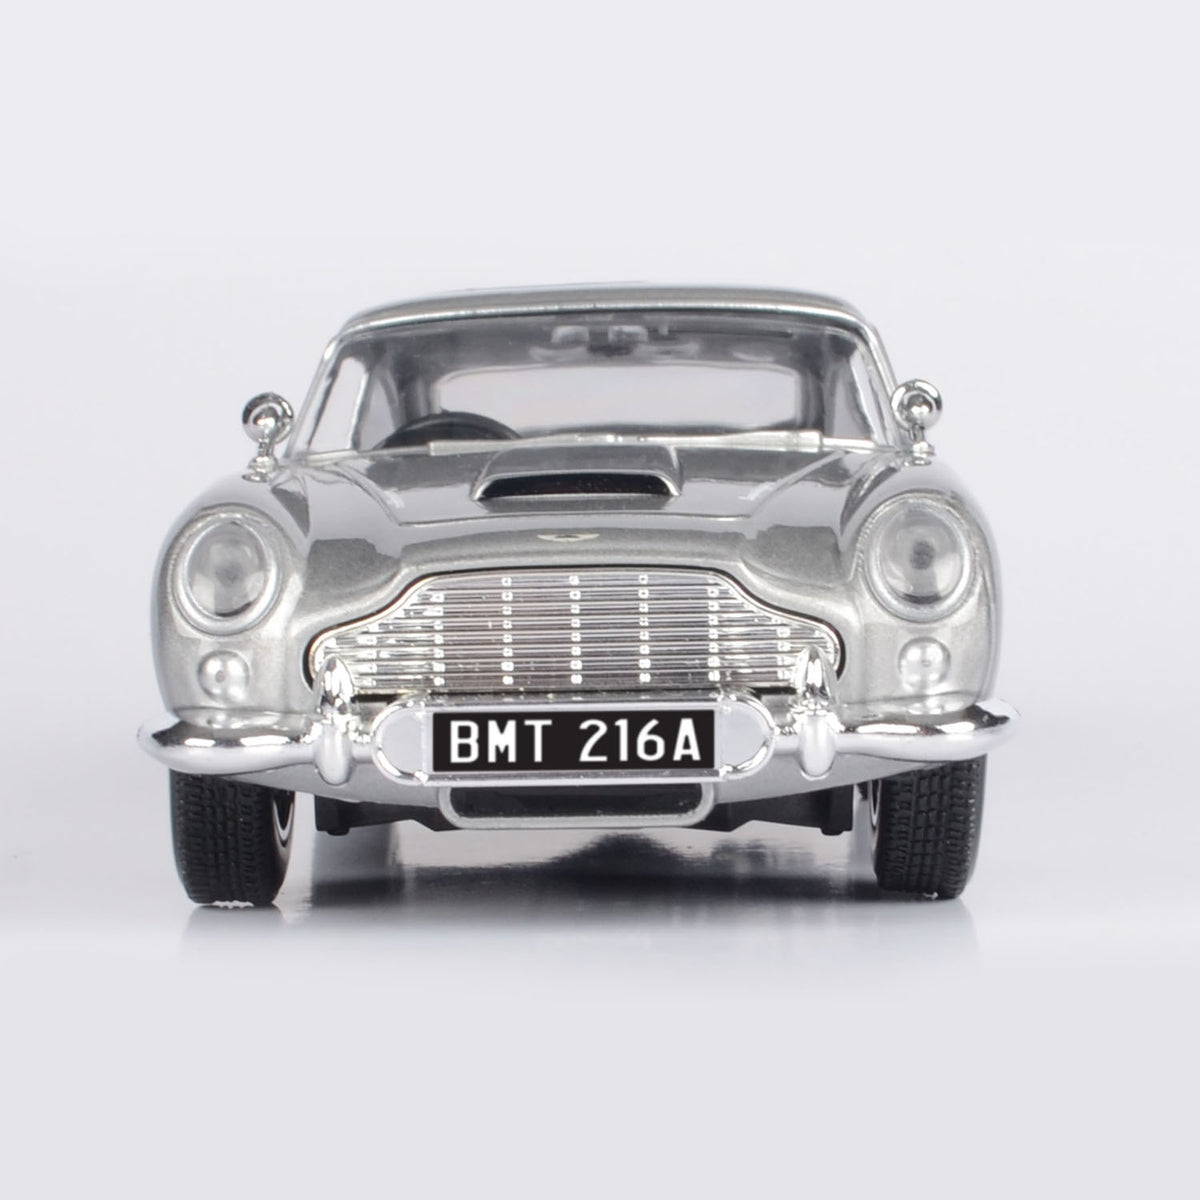 James Bond Aston Martin DB5 Model Car - Goldfinger Edition - By Motormax